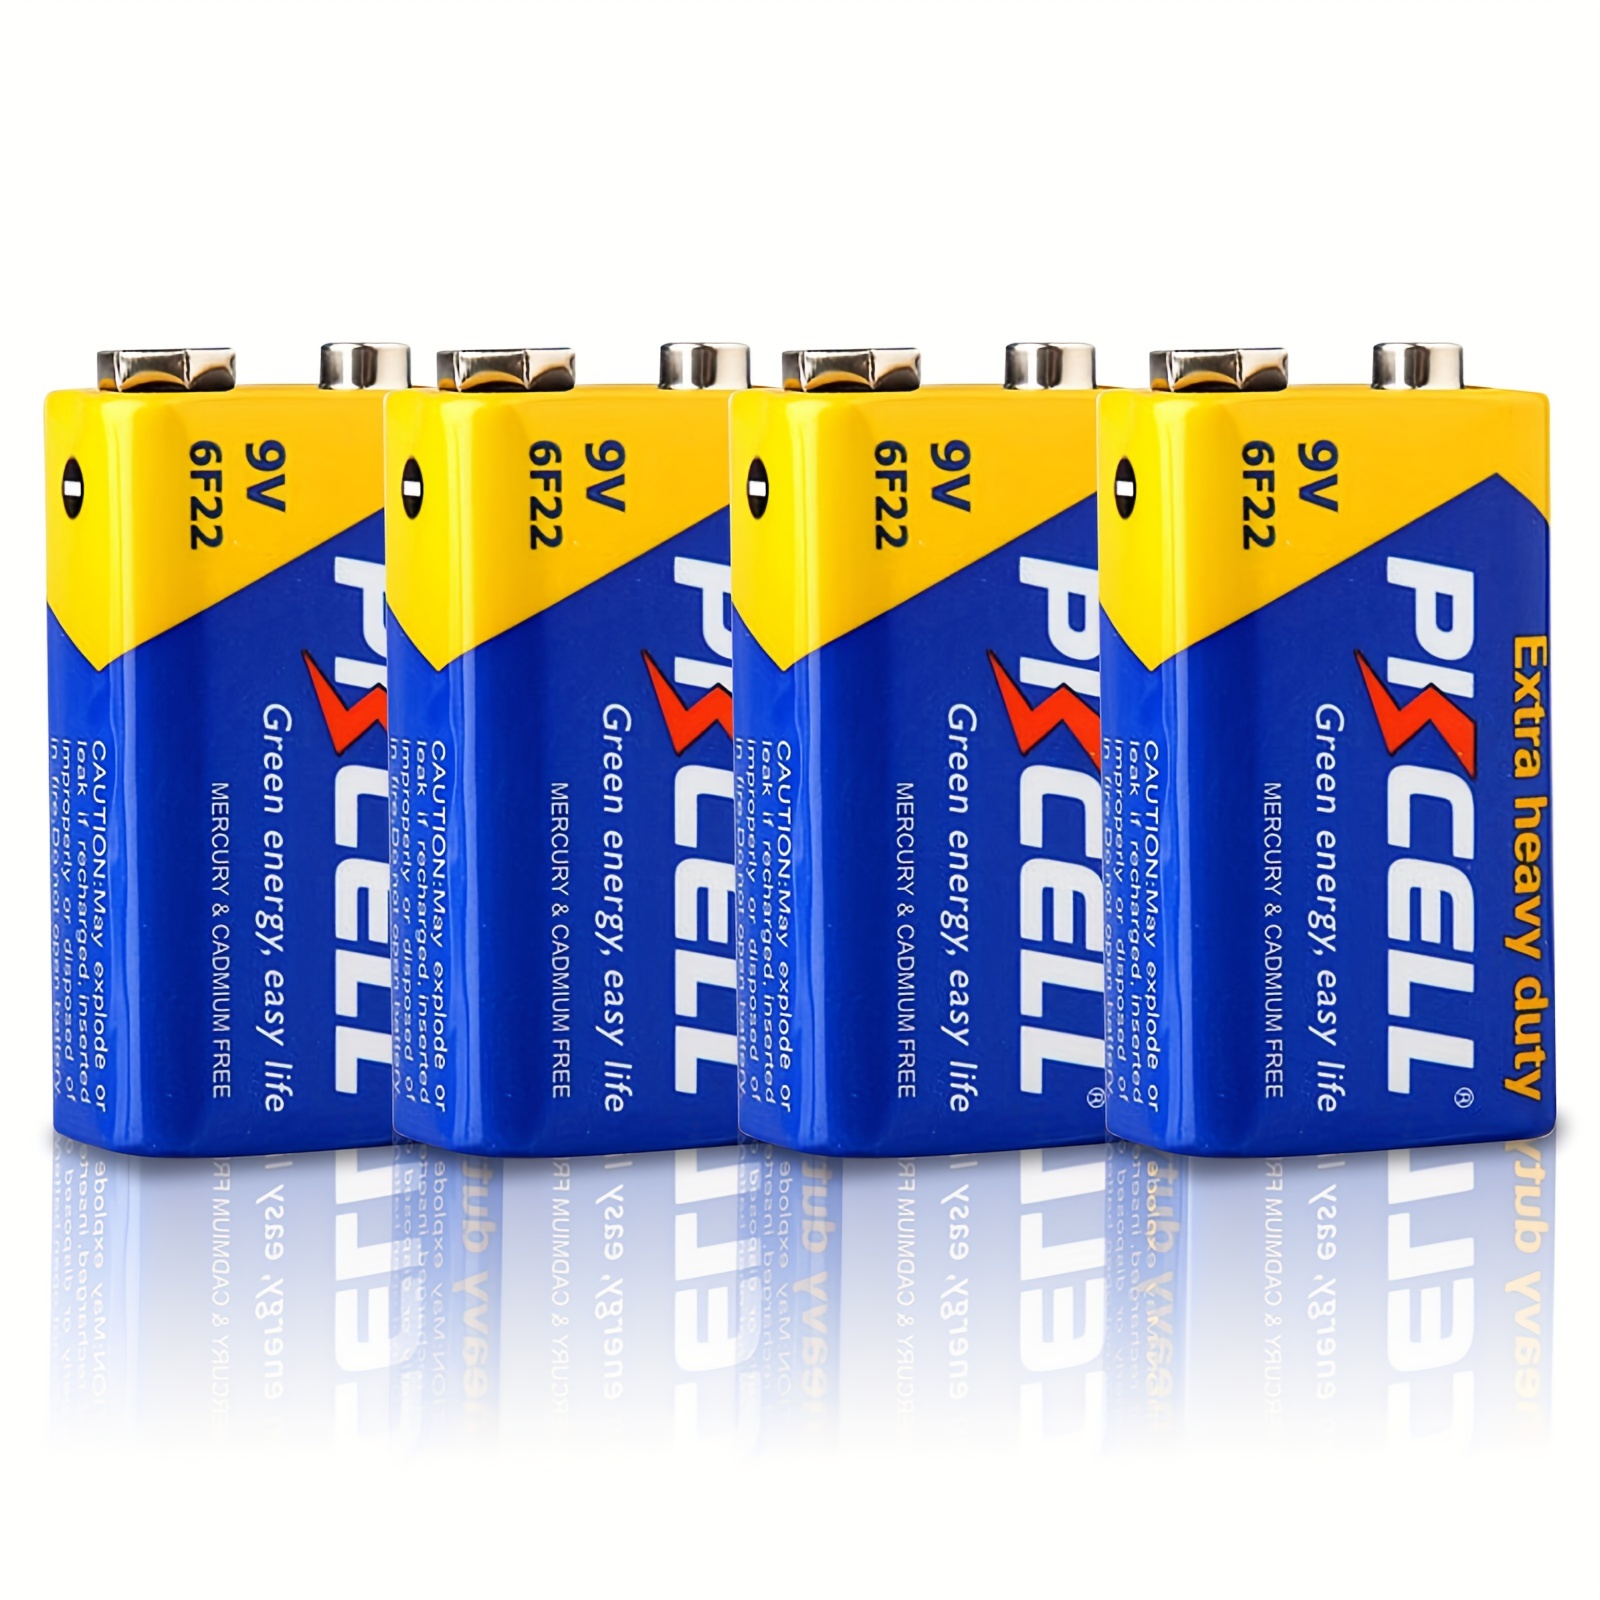 

4pcs Pkcell 9v Heavy Duty Zinc Carbon Batteries, 6f22 Extra Long Life For Smoke Detectors